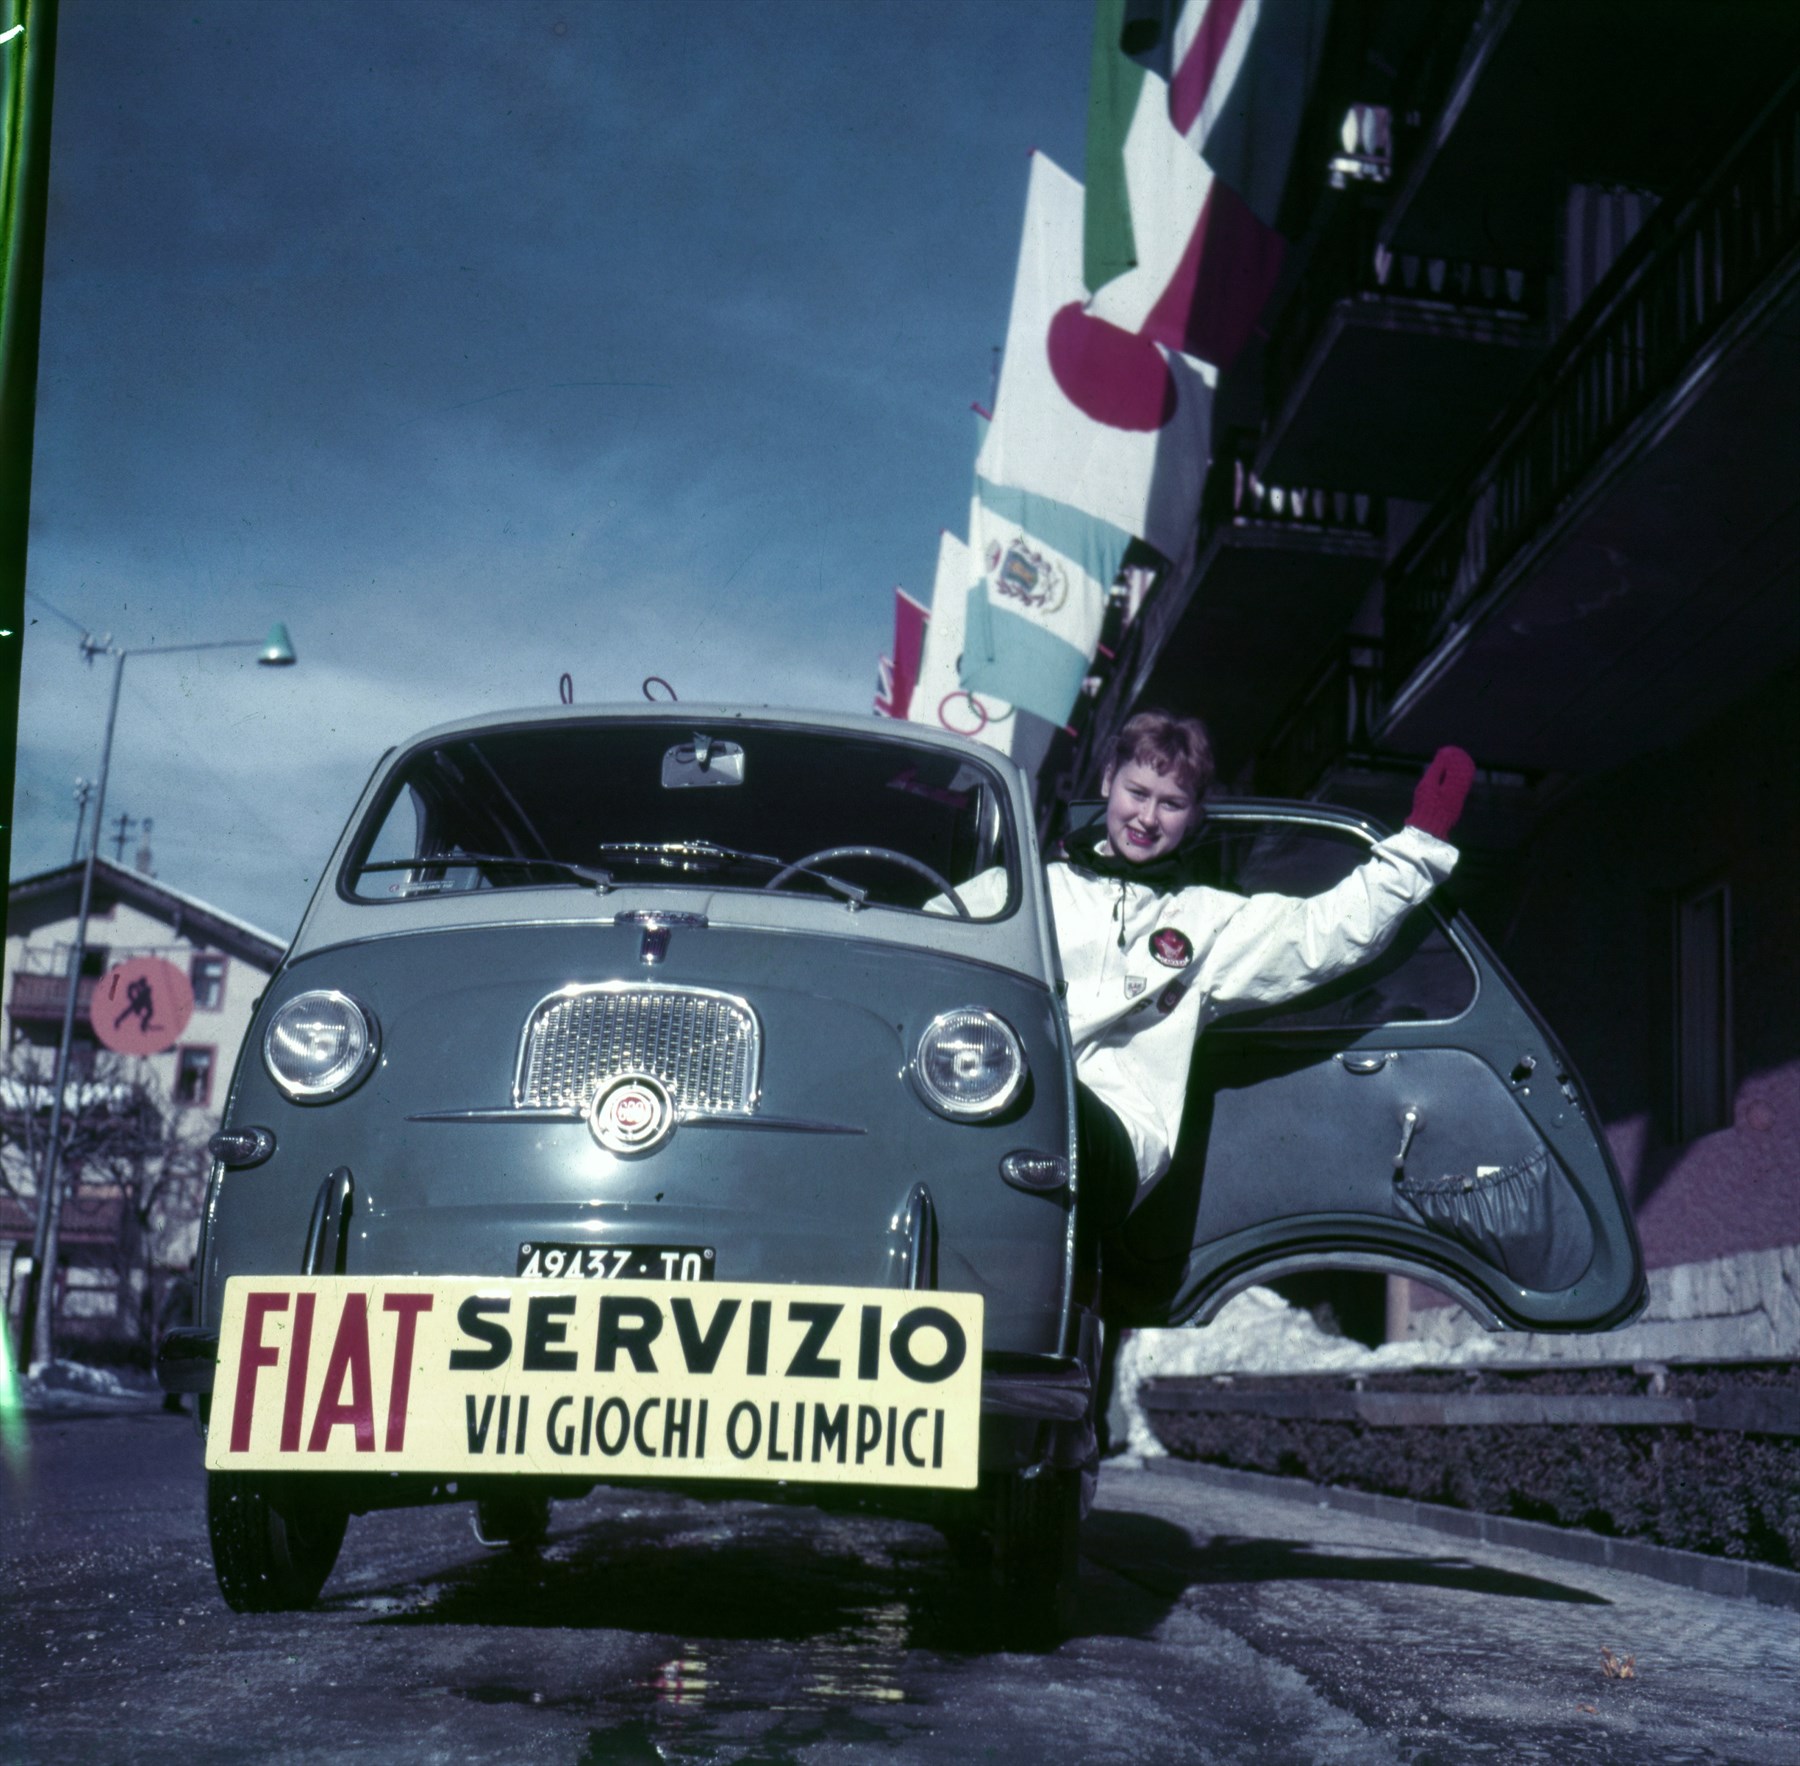 The legendary Fiat 600 Multipla conquers London